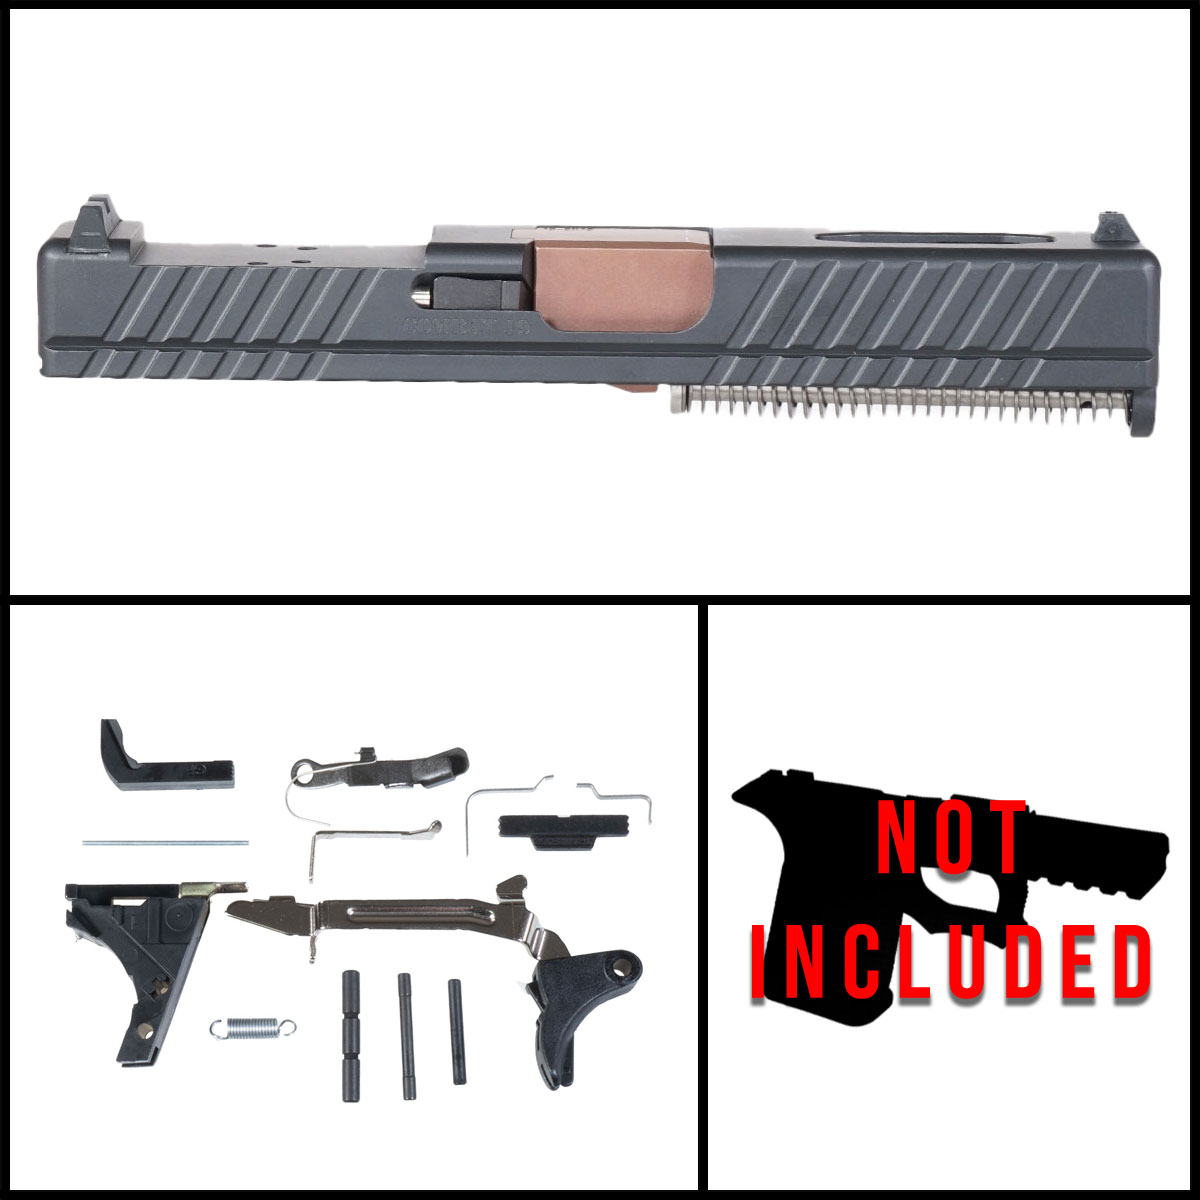 DTT 'Undefined' 9mm Full Gun Kit - Glock 19 Gen 1-3 Compatible